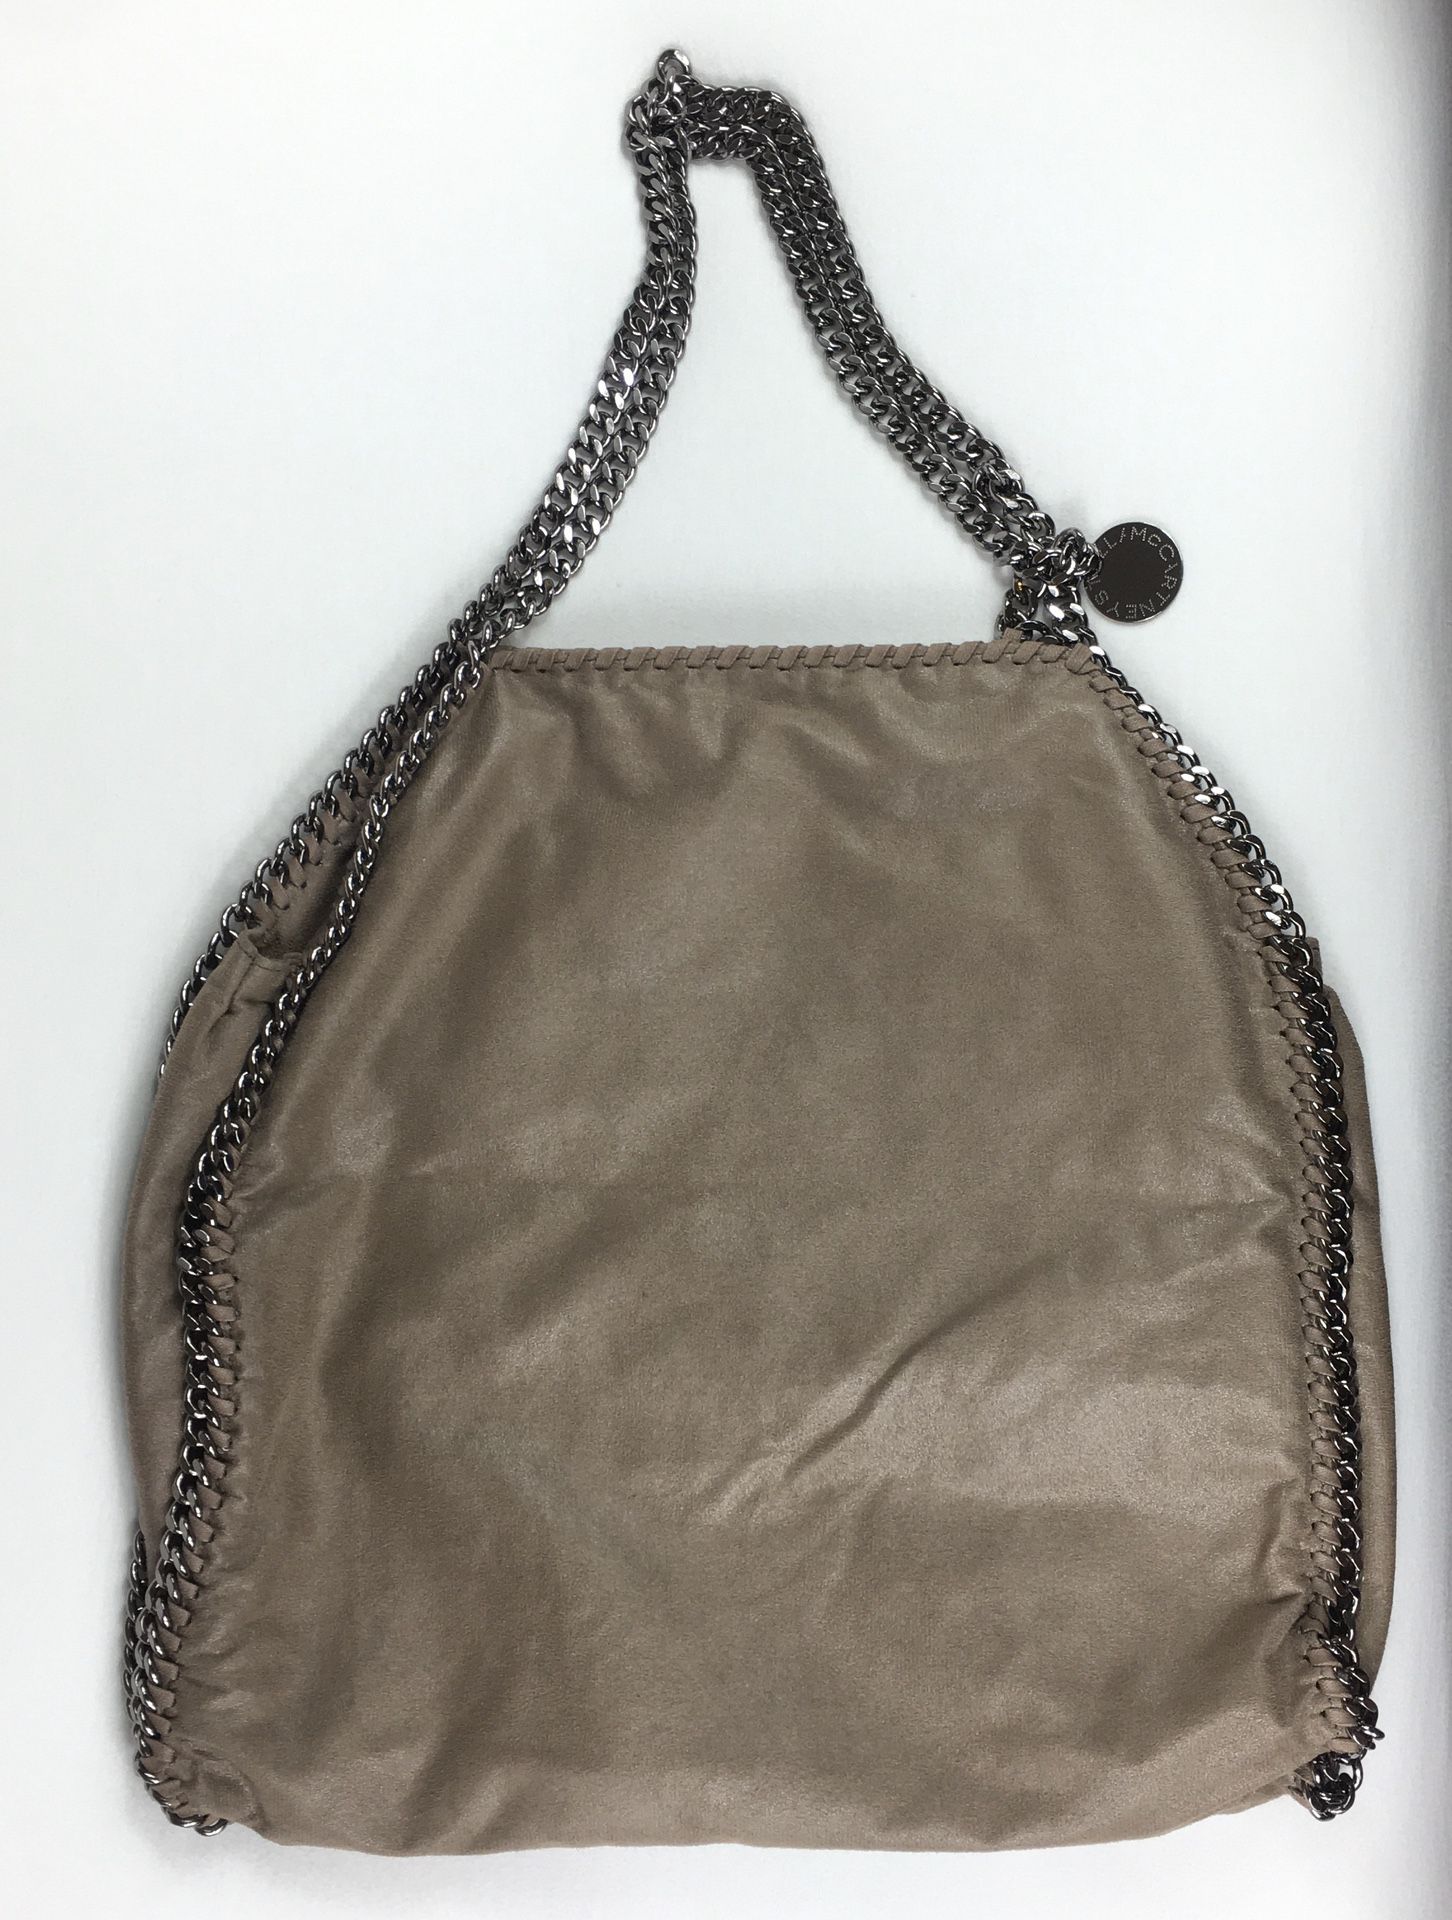 Falabella Shaggy deer beige large tote bag purse heavy chain metal handles